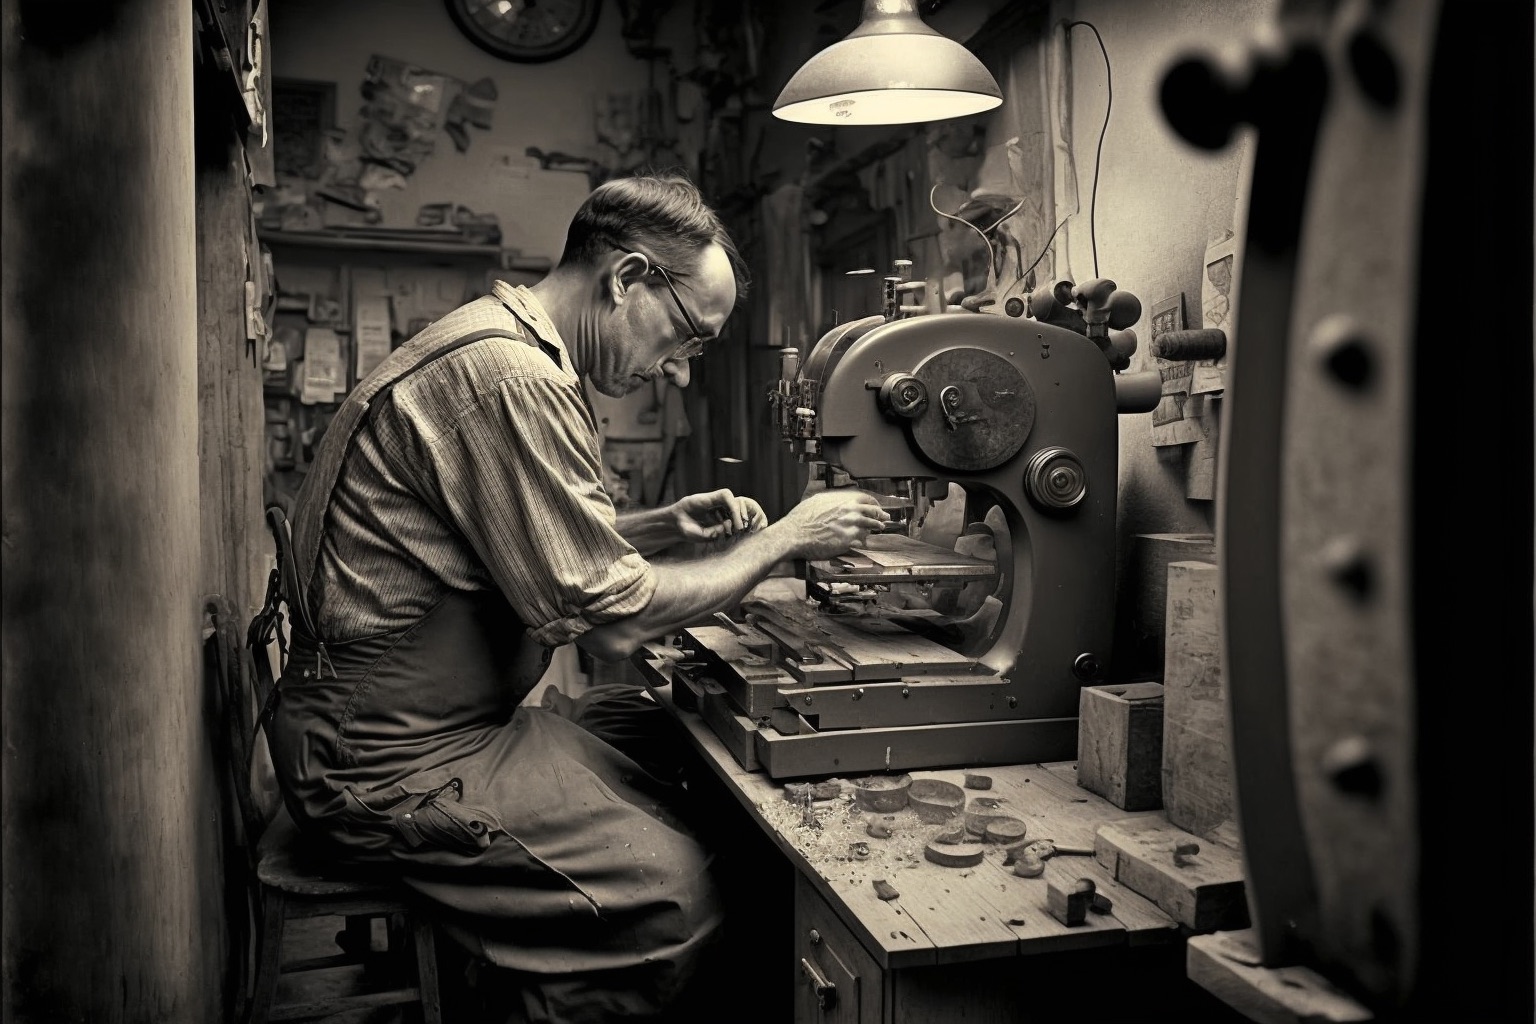 Craftsman working on a tool workshop